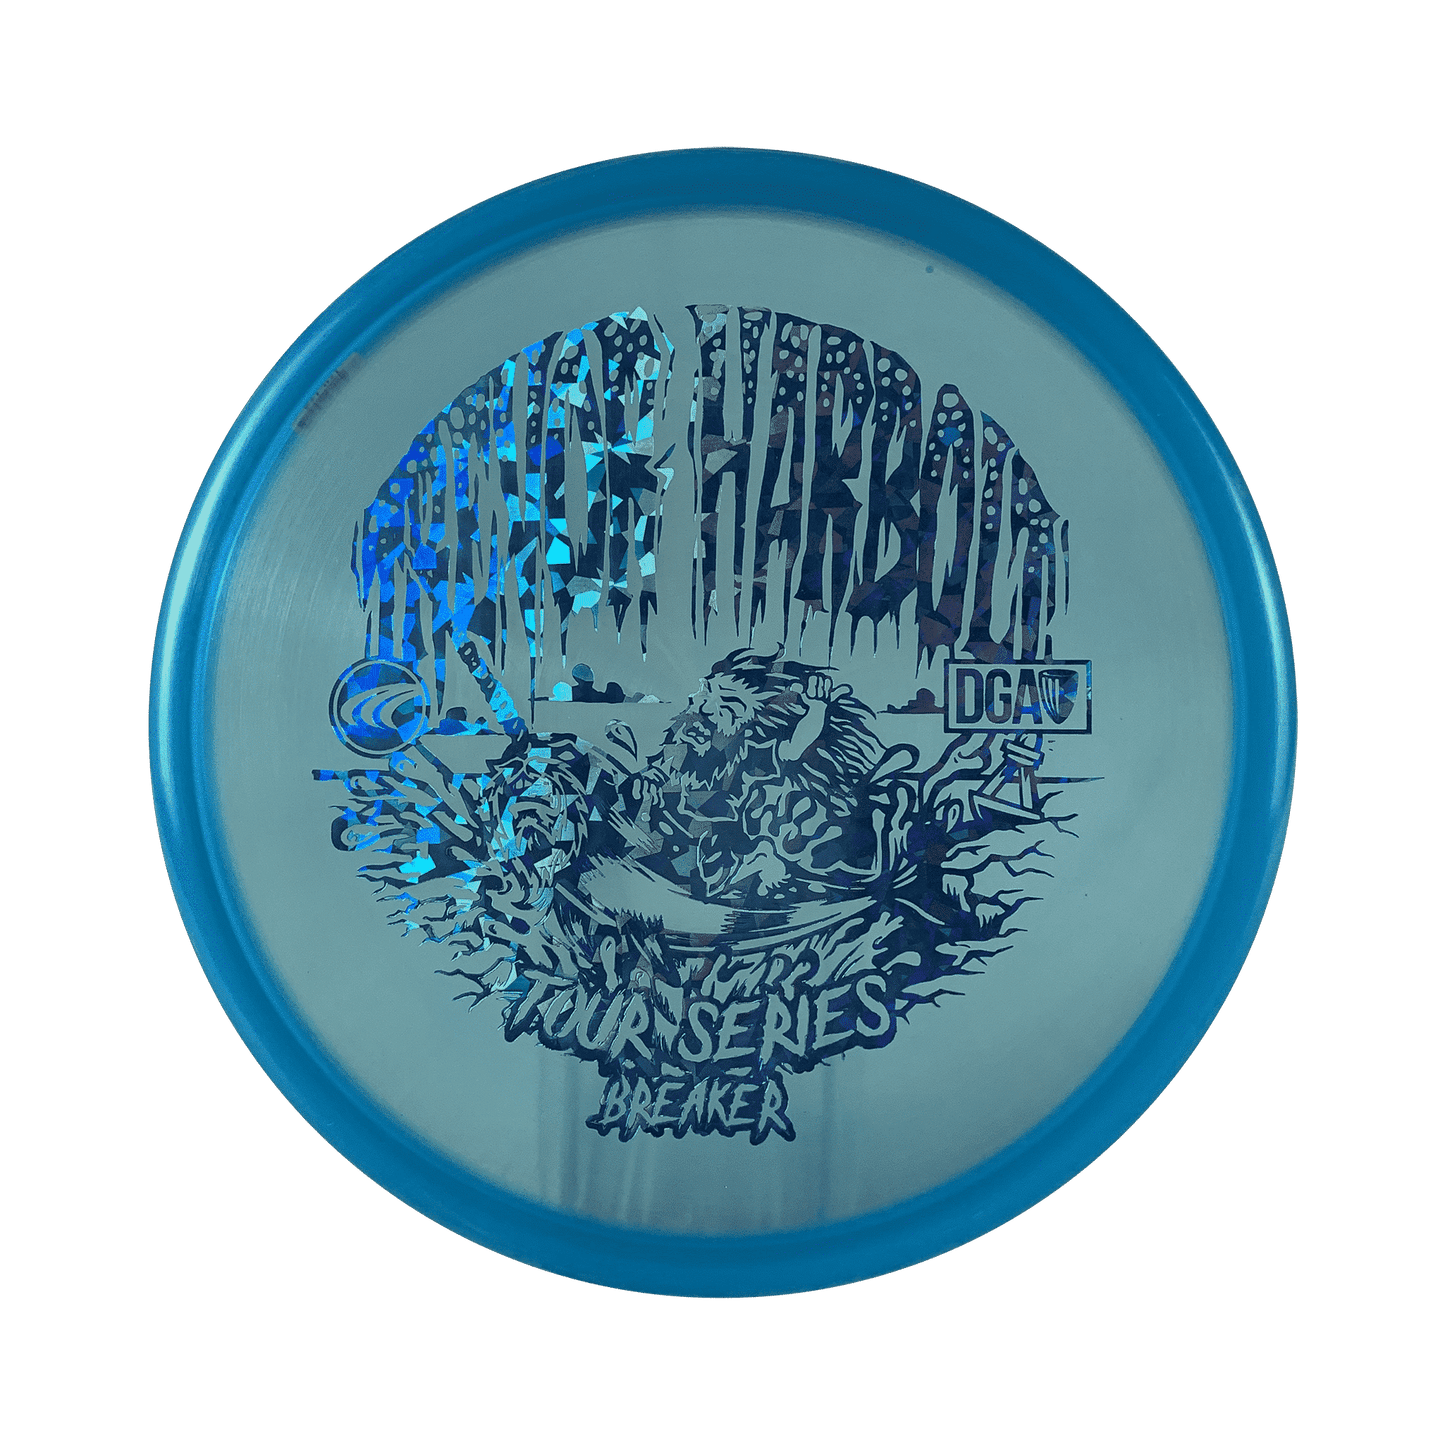 Signature Pro Line Swirl Breaker - Tour Series Disc DGA blue 170 